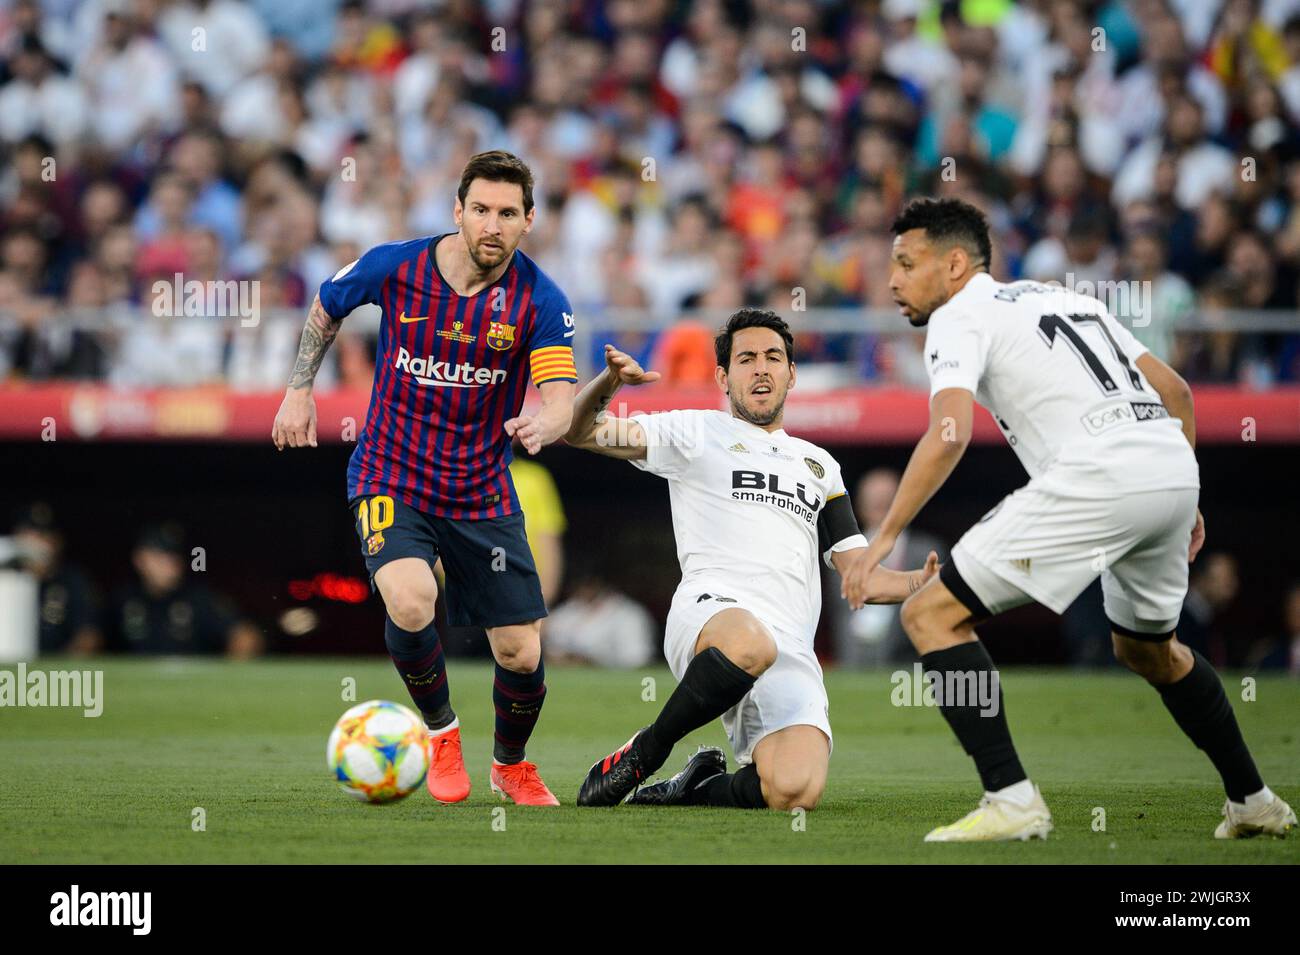 Futbol Club Barcelona's Leo Messi dribbles past Valencia football club's Leo Messi during the Copa del Rey Final in Seville, Spain. Stock Photo